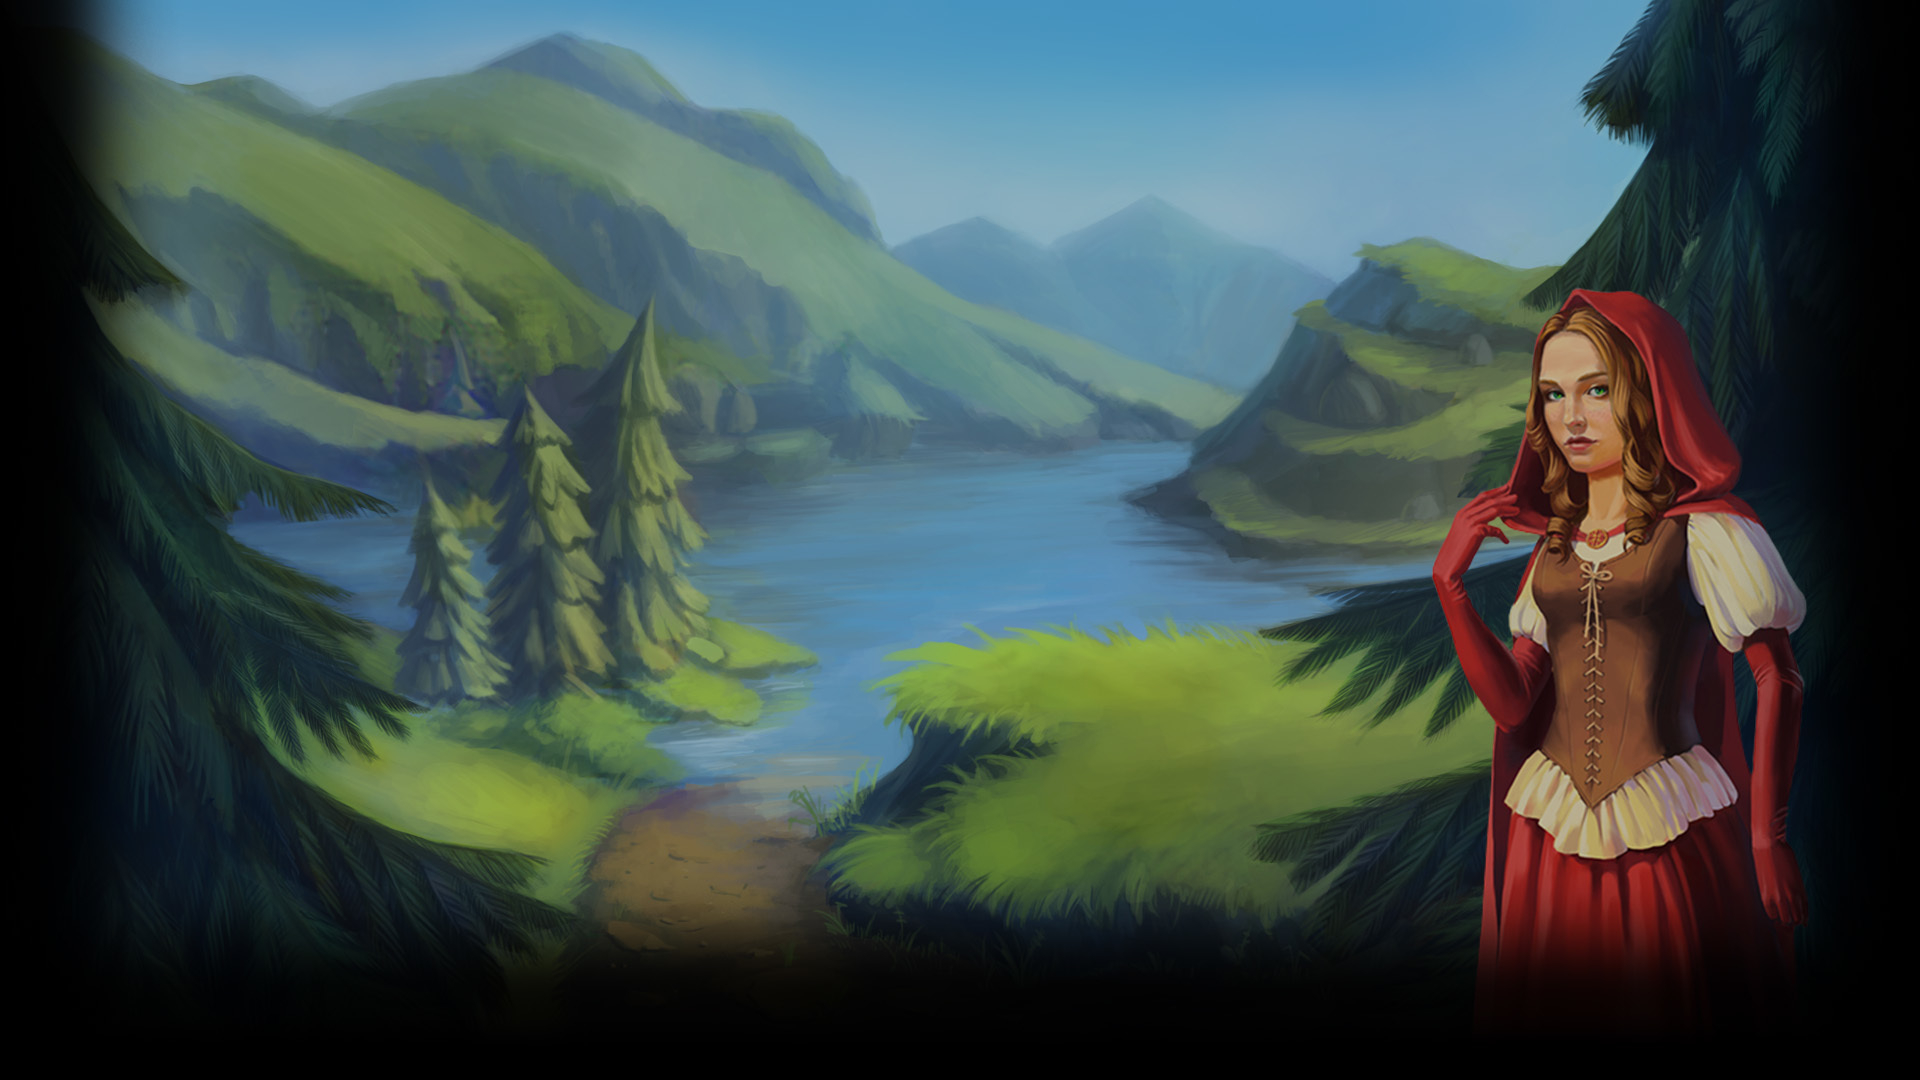 Picross Fairytale: nonogram: Red Riding Hood secret